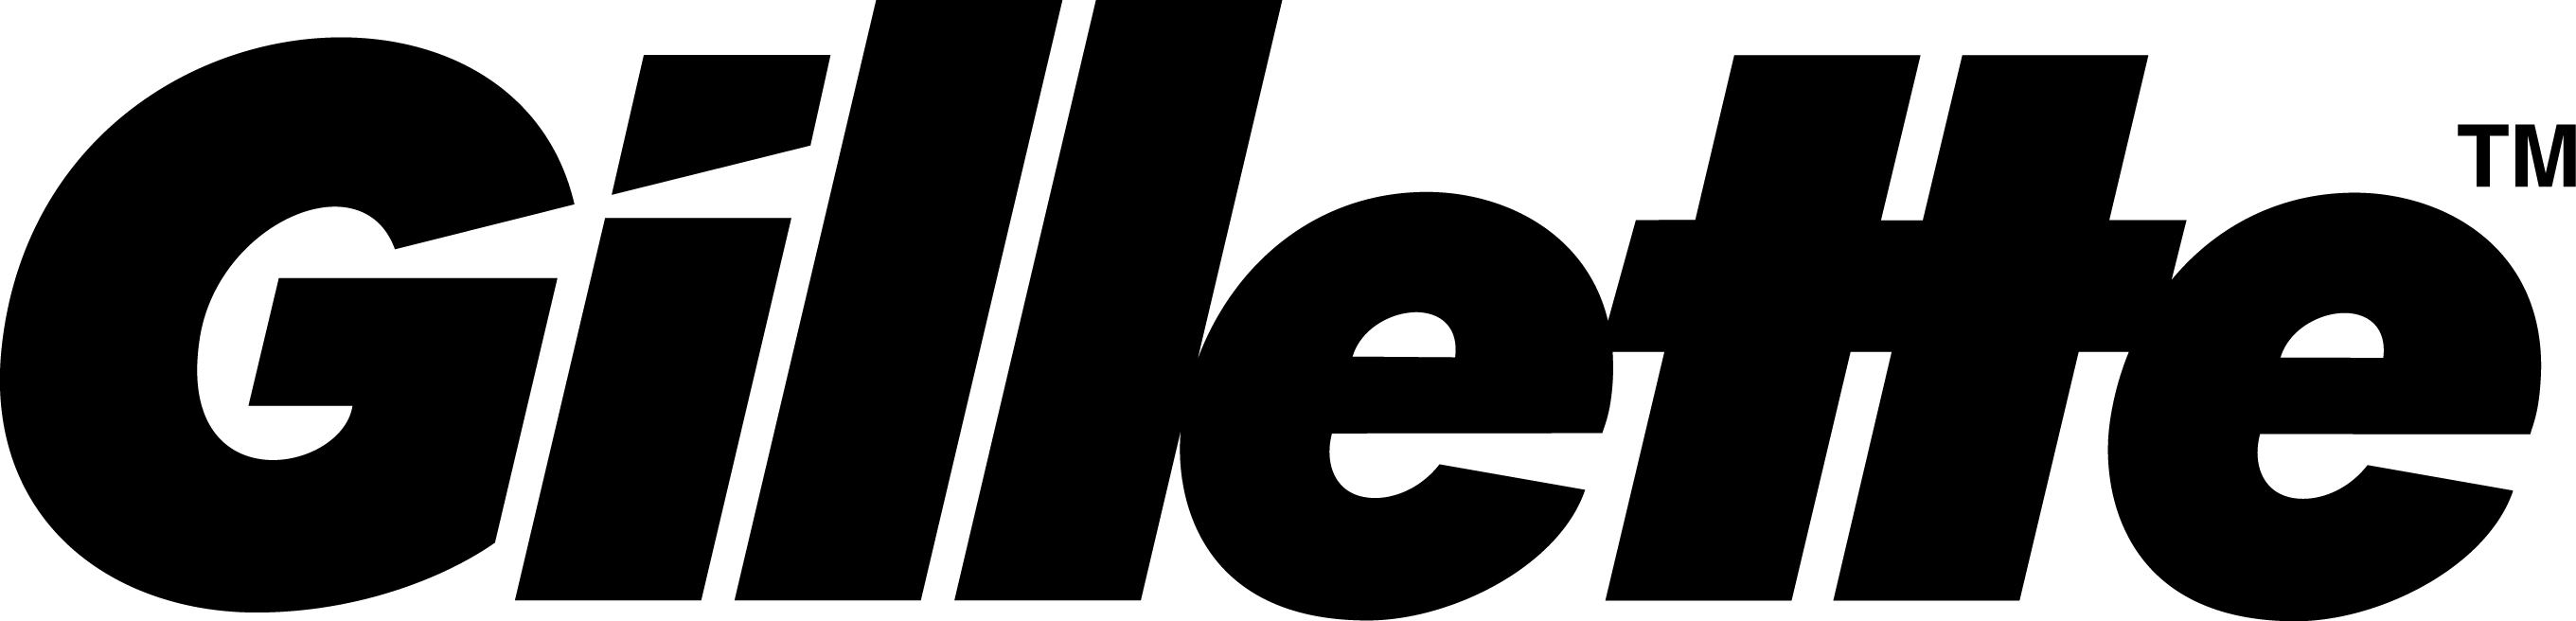 Gillette Logo Vectors Free Do